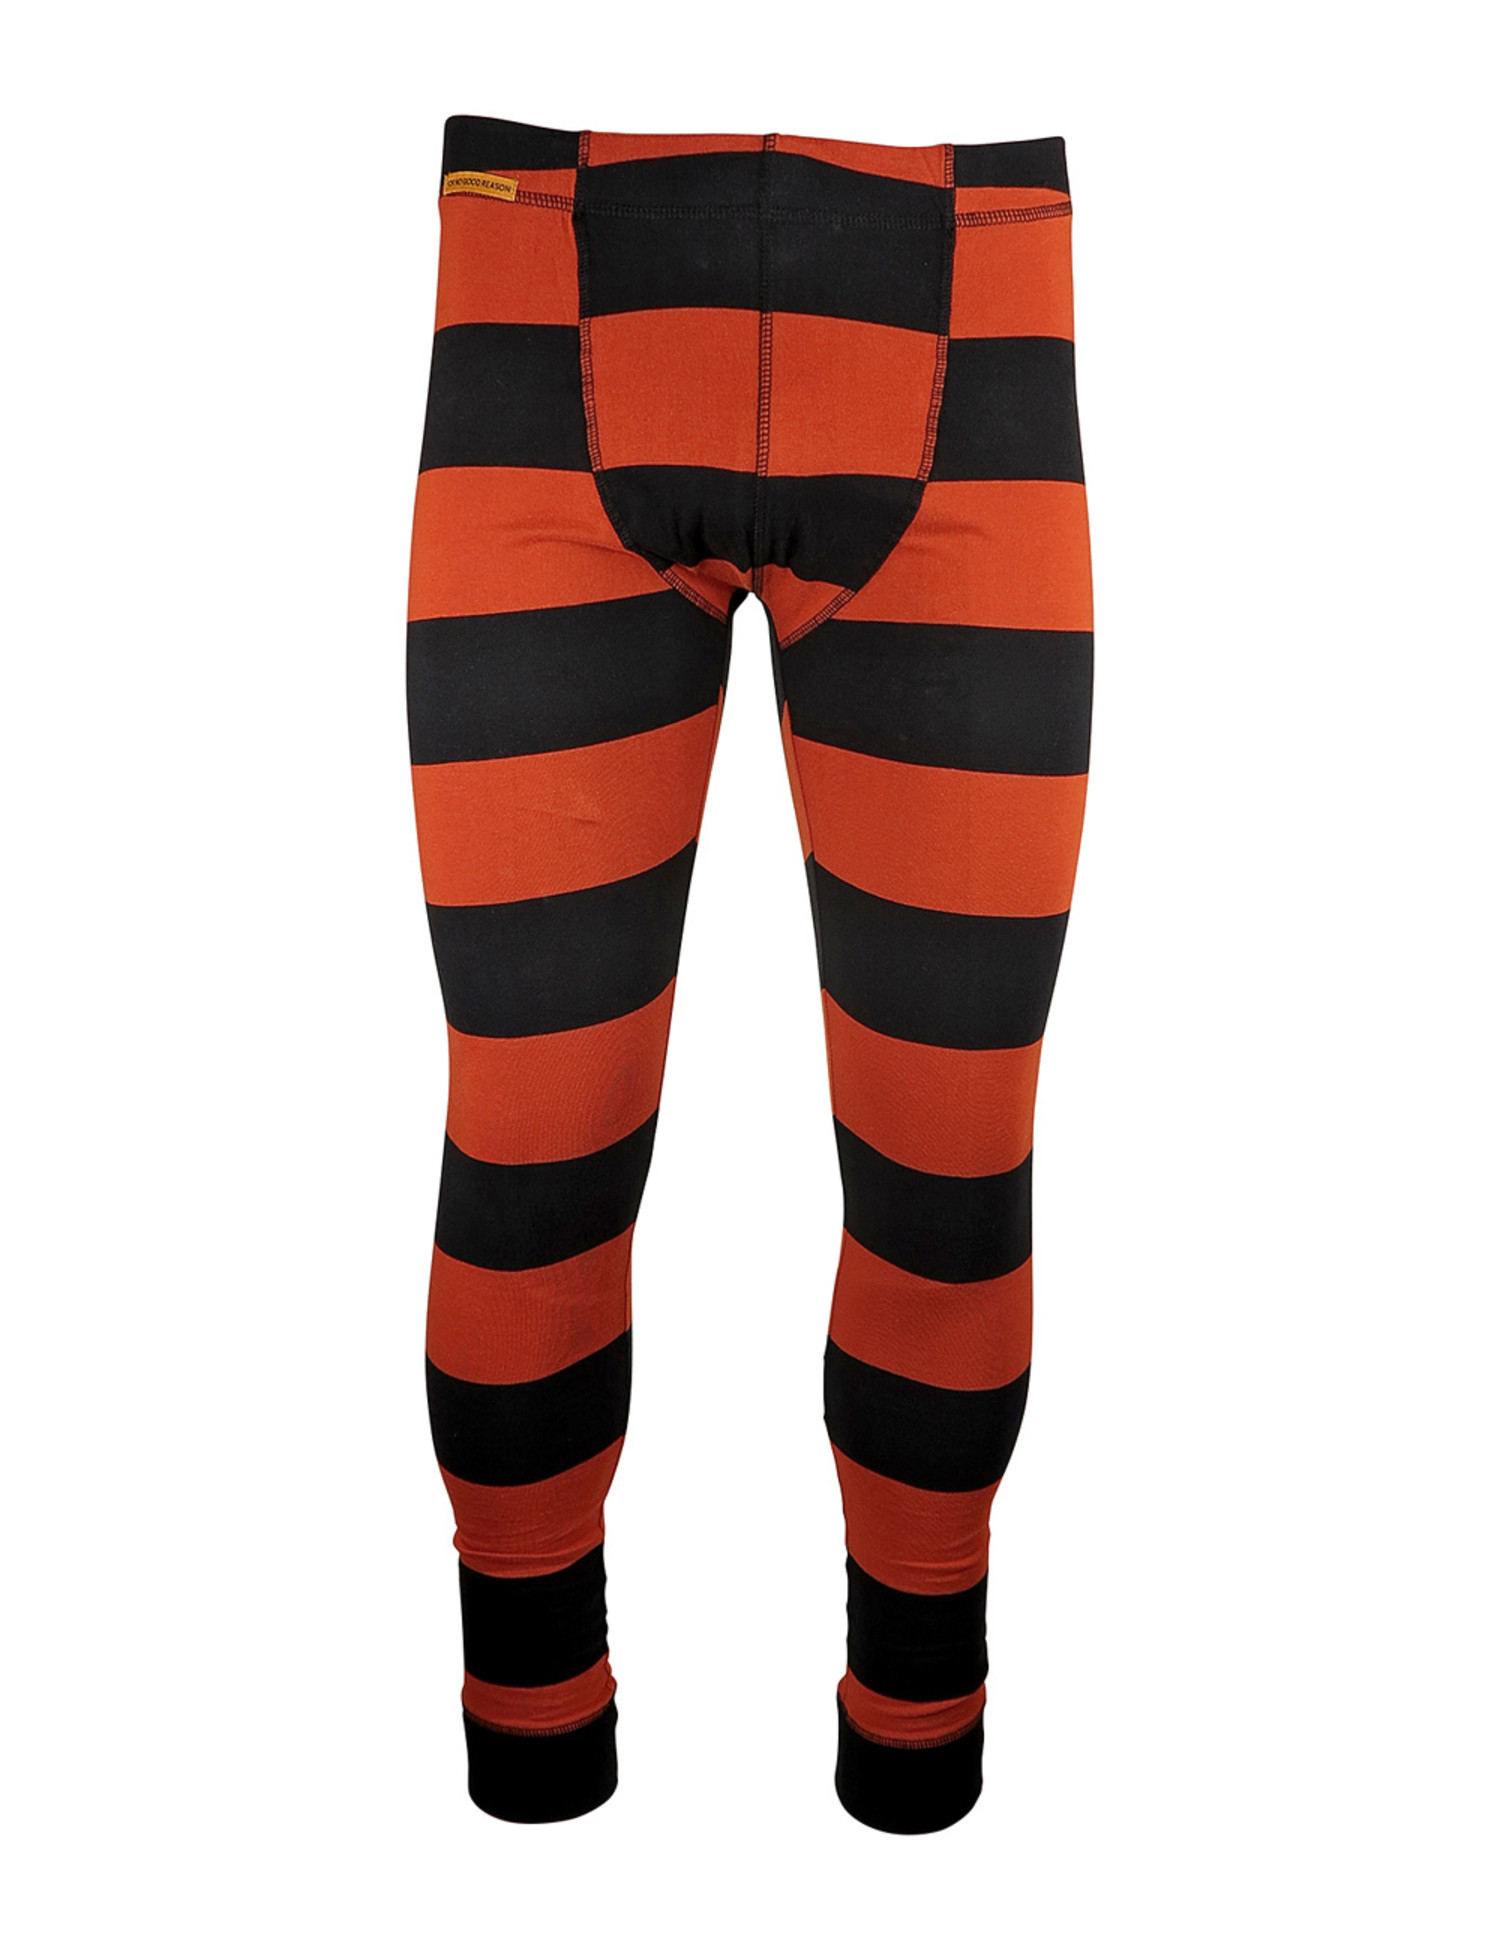 Long John striped pant black/orange